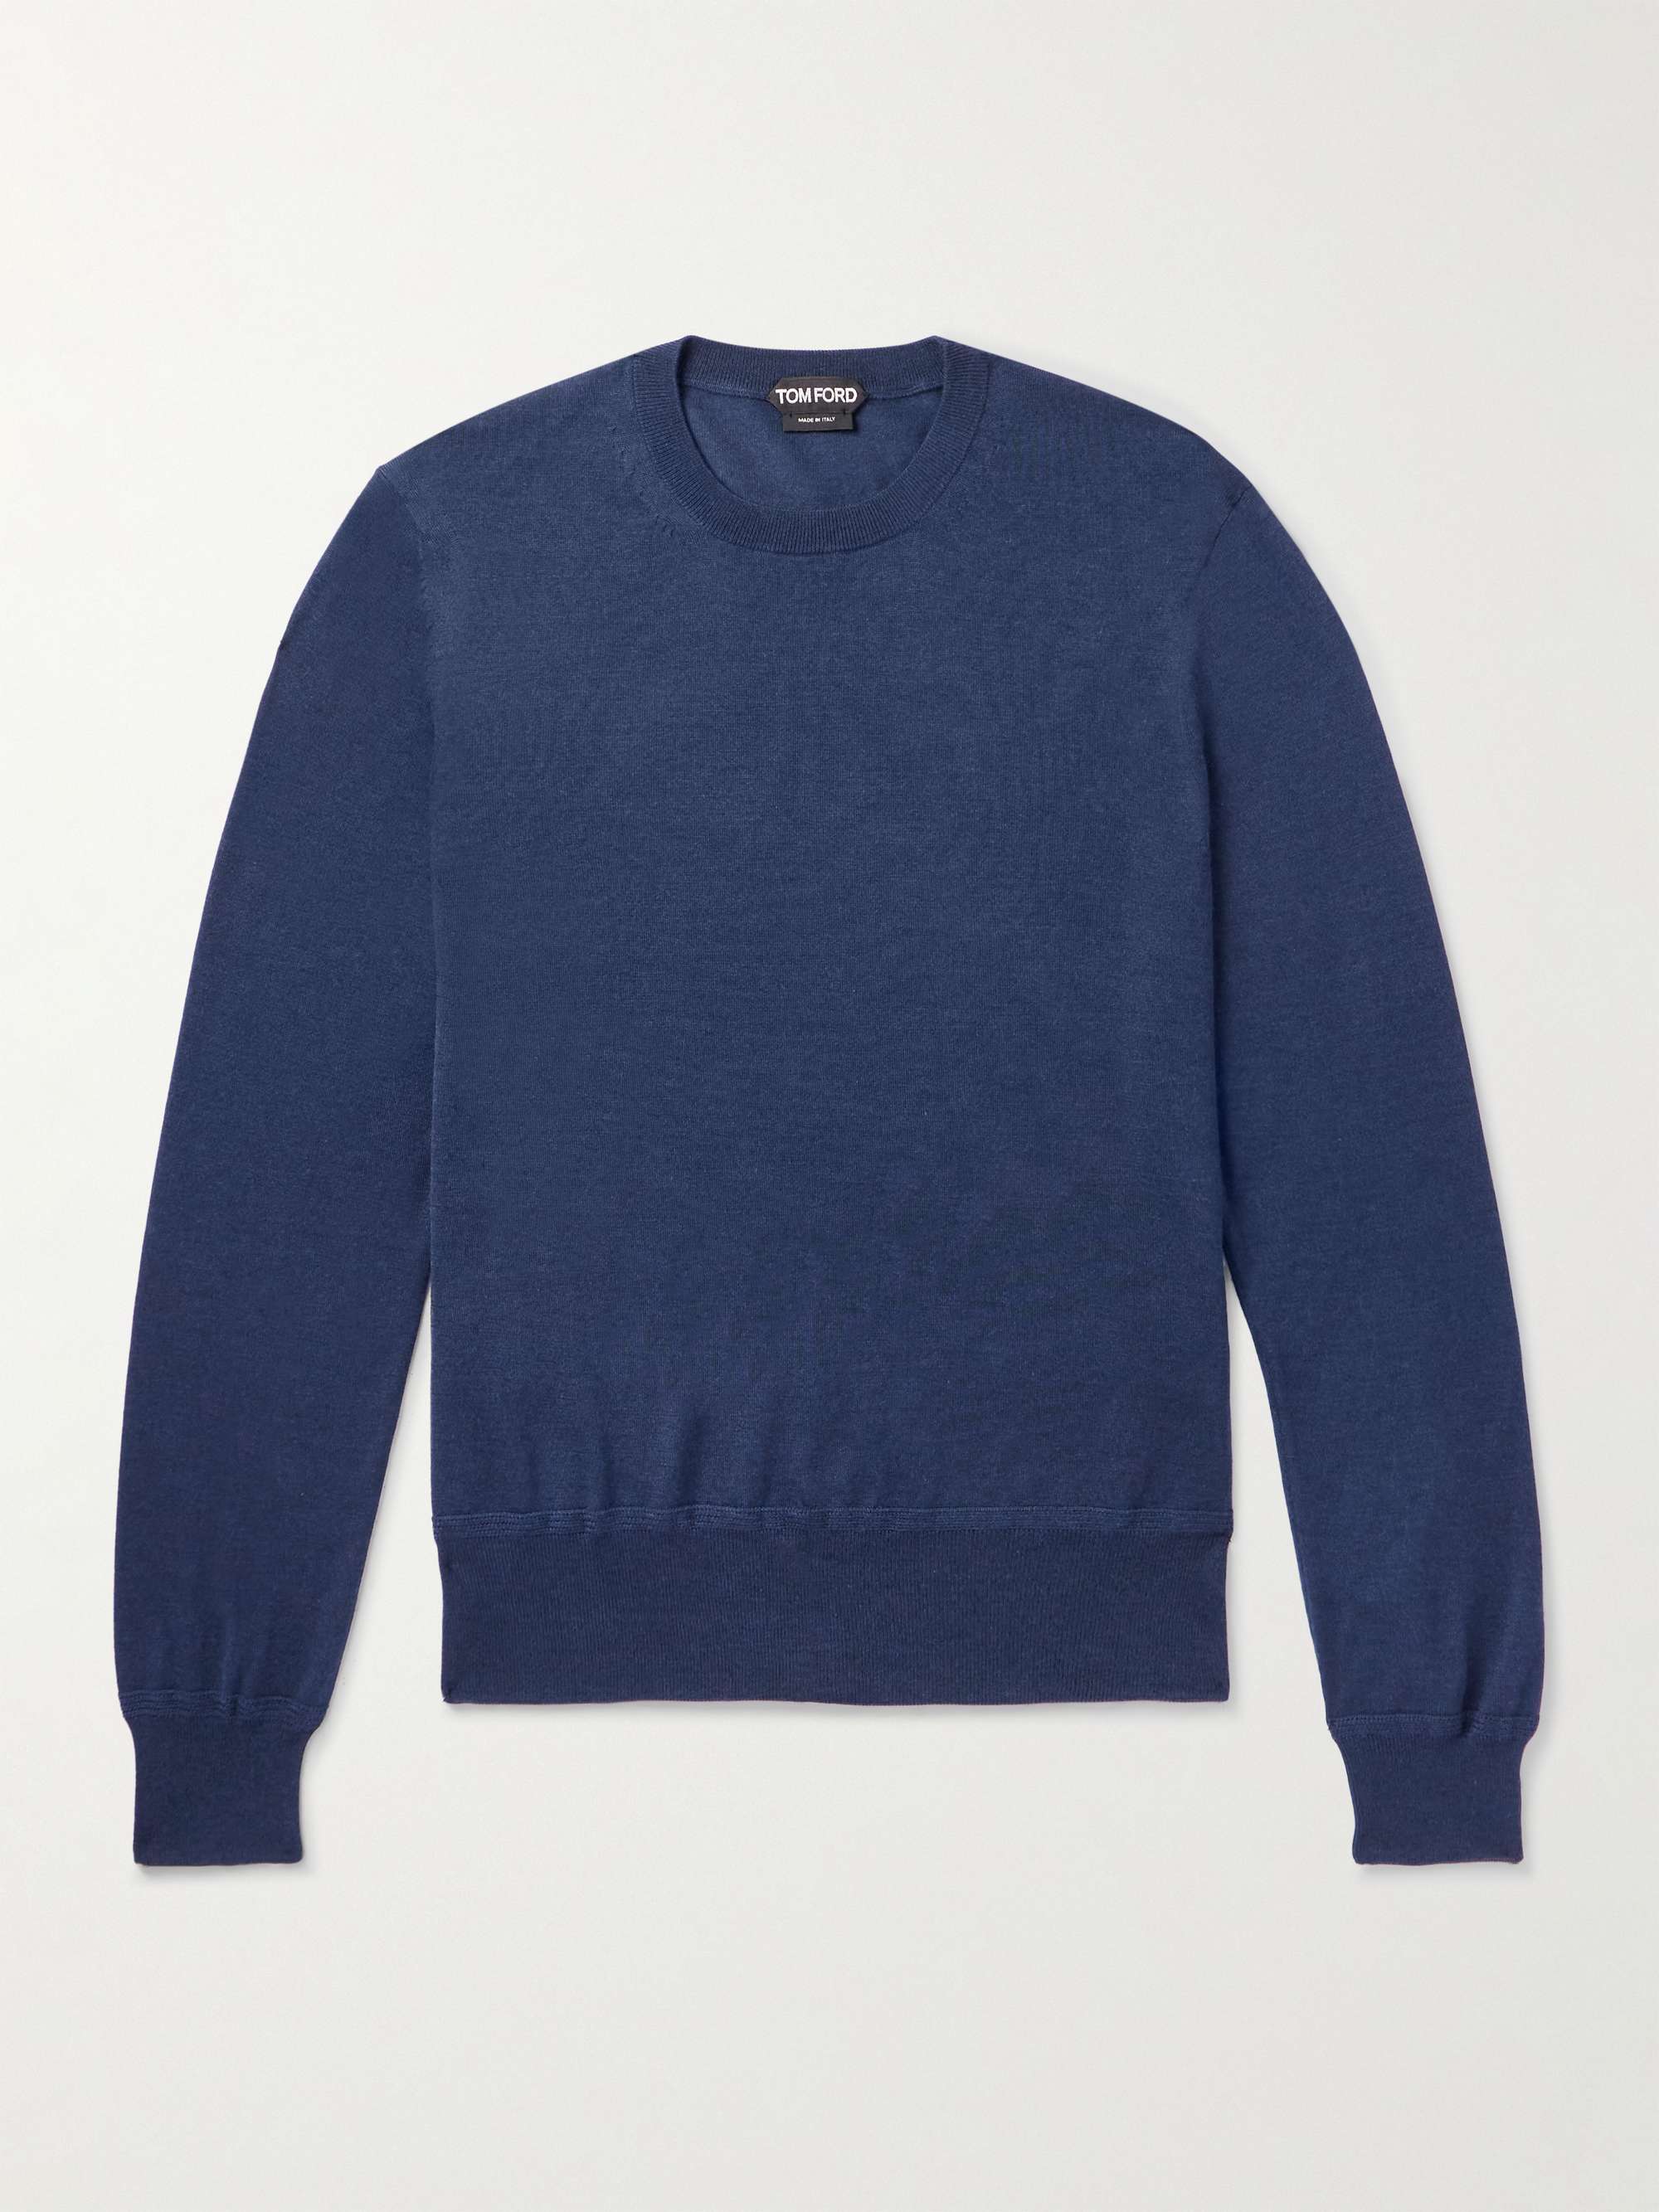 TOM FORD Slim-Fit Cashmere and Silk-Blend Sweater for Men | MR PORTER